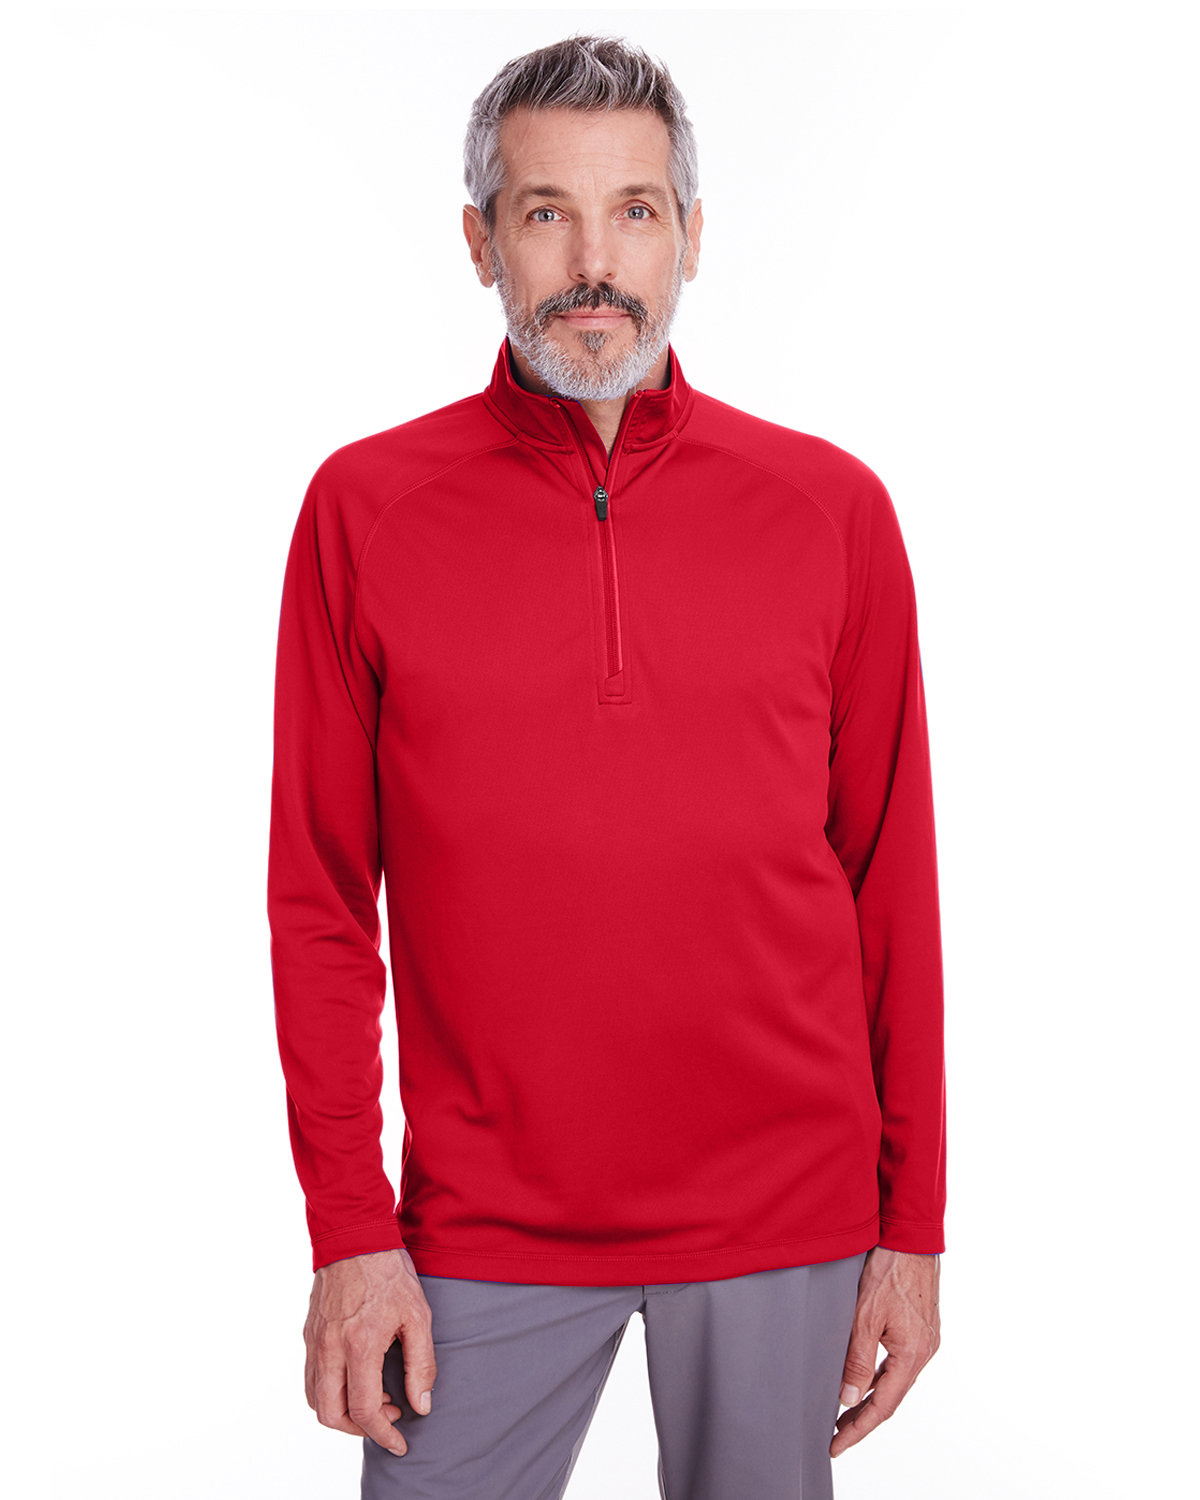 Spyder Men's Freestyle Half-Zip Pullover RED 